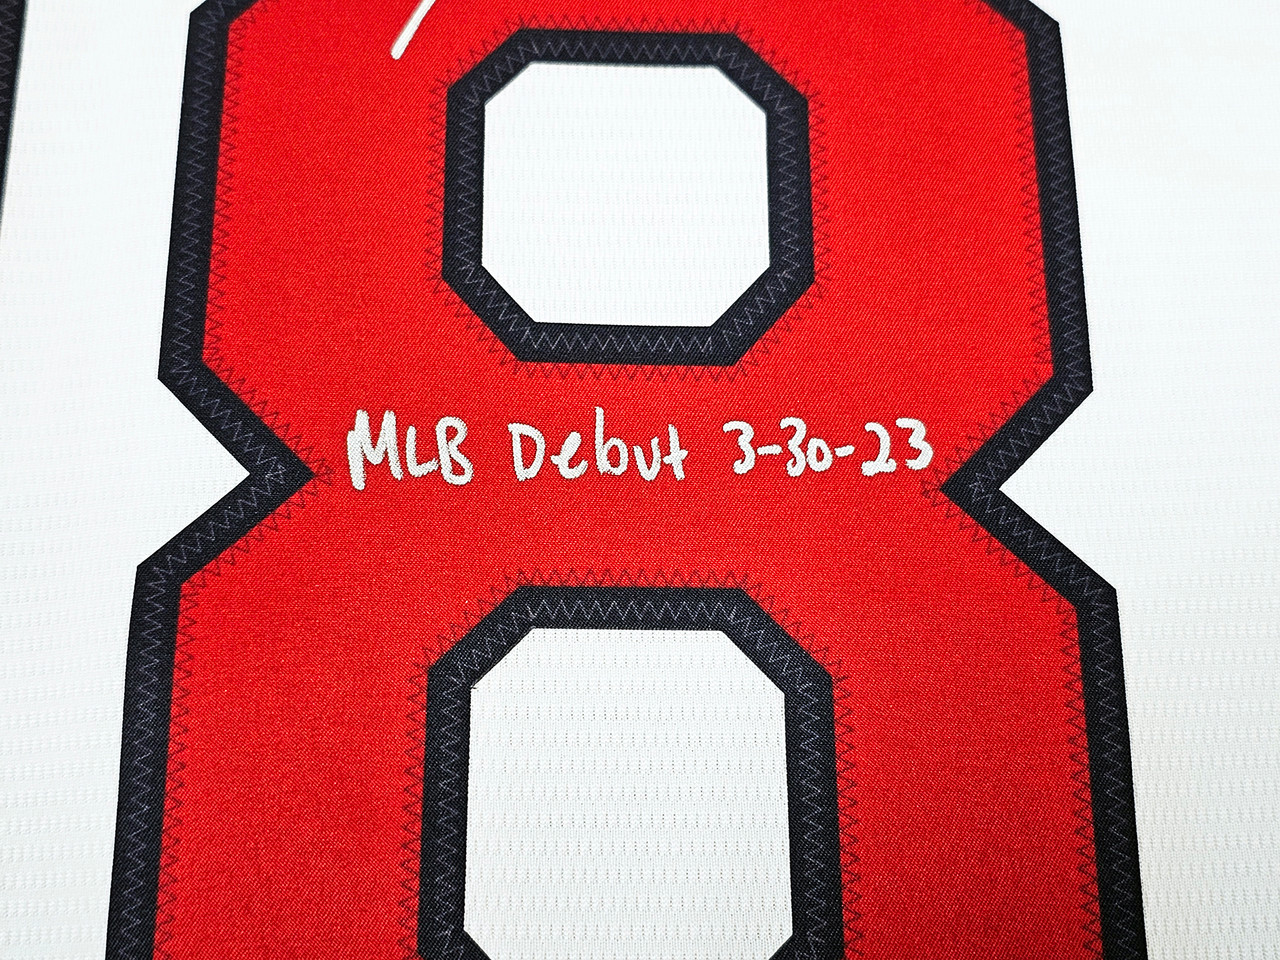 Fanatics Authentic Jordan Walker St. Louis Cardinals Autographed White Nike Replica Jersey with MLB Debut 3-30-23 Inscription